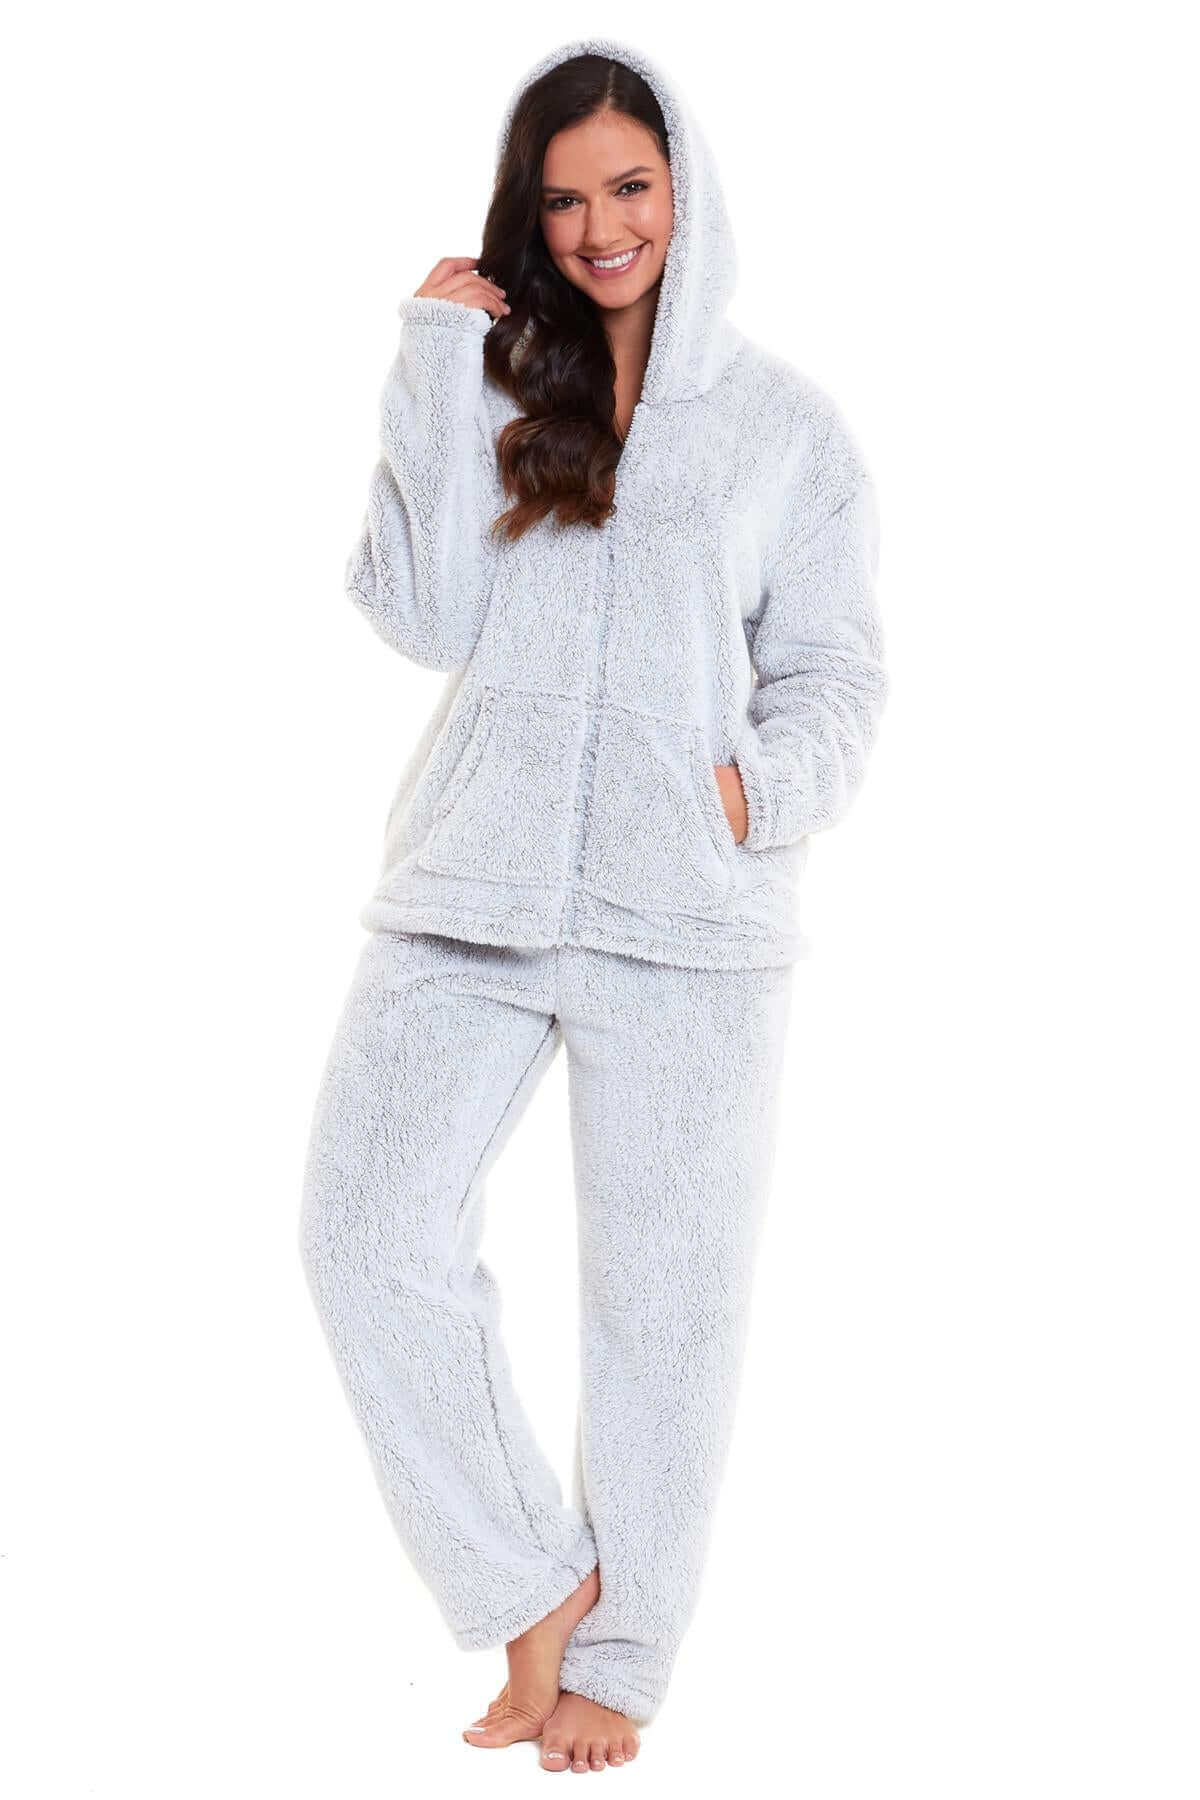 Women's Hooded Pyjamas Super Soft Fleece Teddy Pyjama Sets. Buy now for £20.00. A Pyjamas by Daisy Dreamer. 12-14, 16-18, 20-22, 8-10, black, breathable, casual, charcoal, daisy dreamer, fleece, girls, gym, hooded, hoodie, hotel, jersey, loungewear, marl